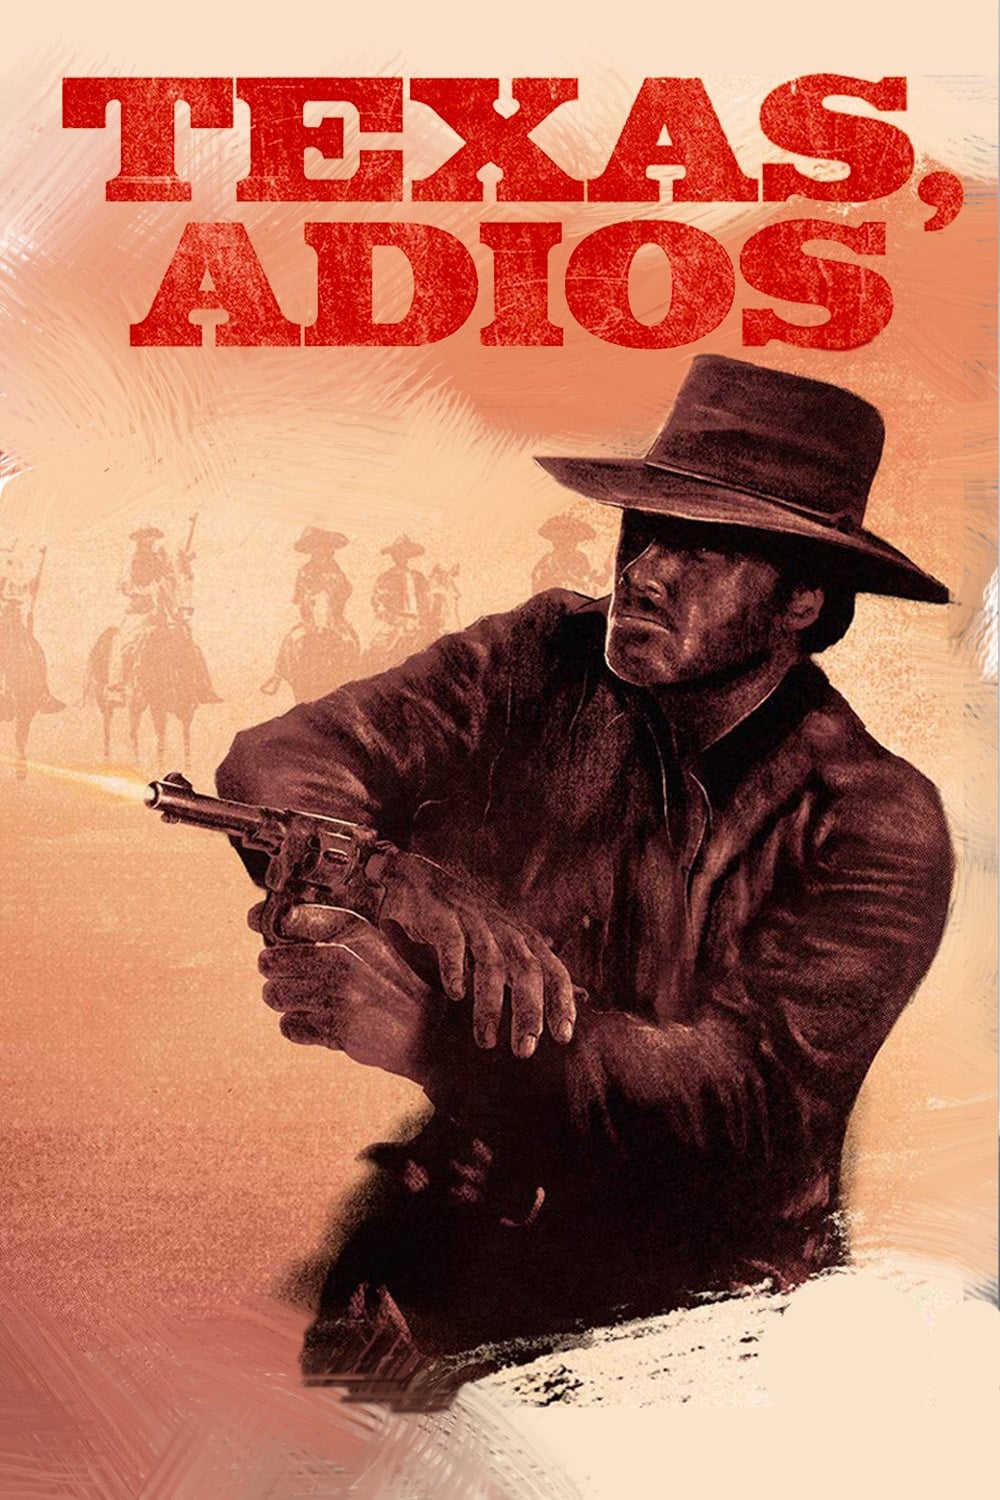 Texas, Adios (1966)